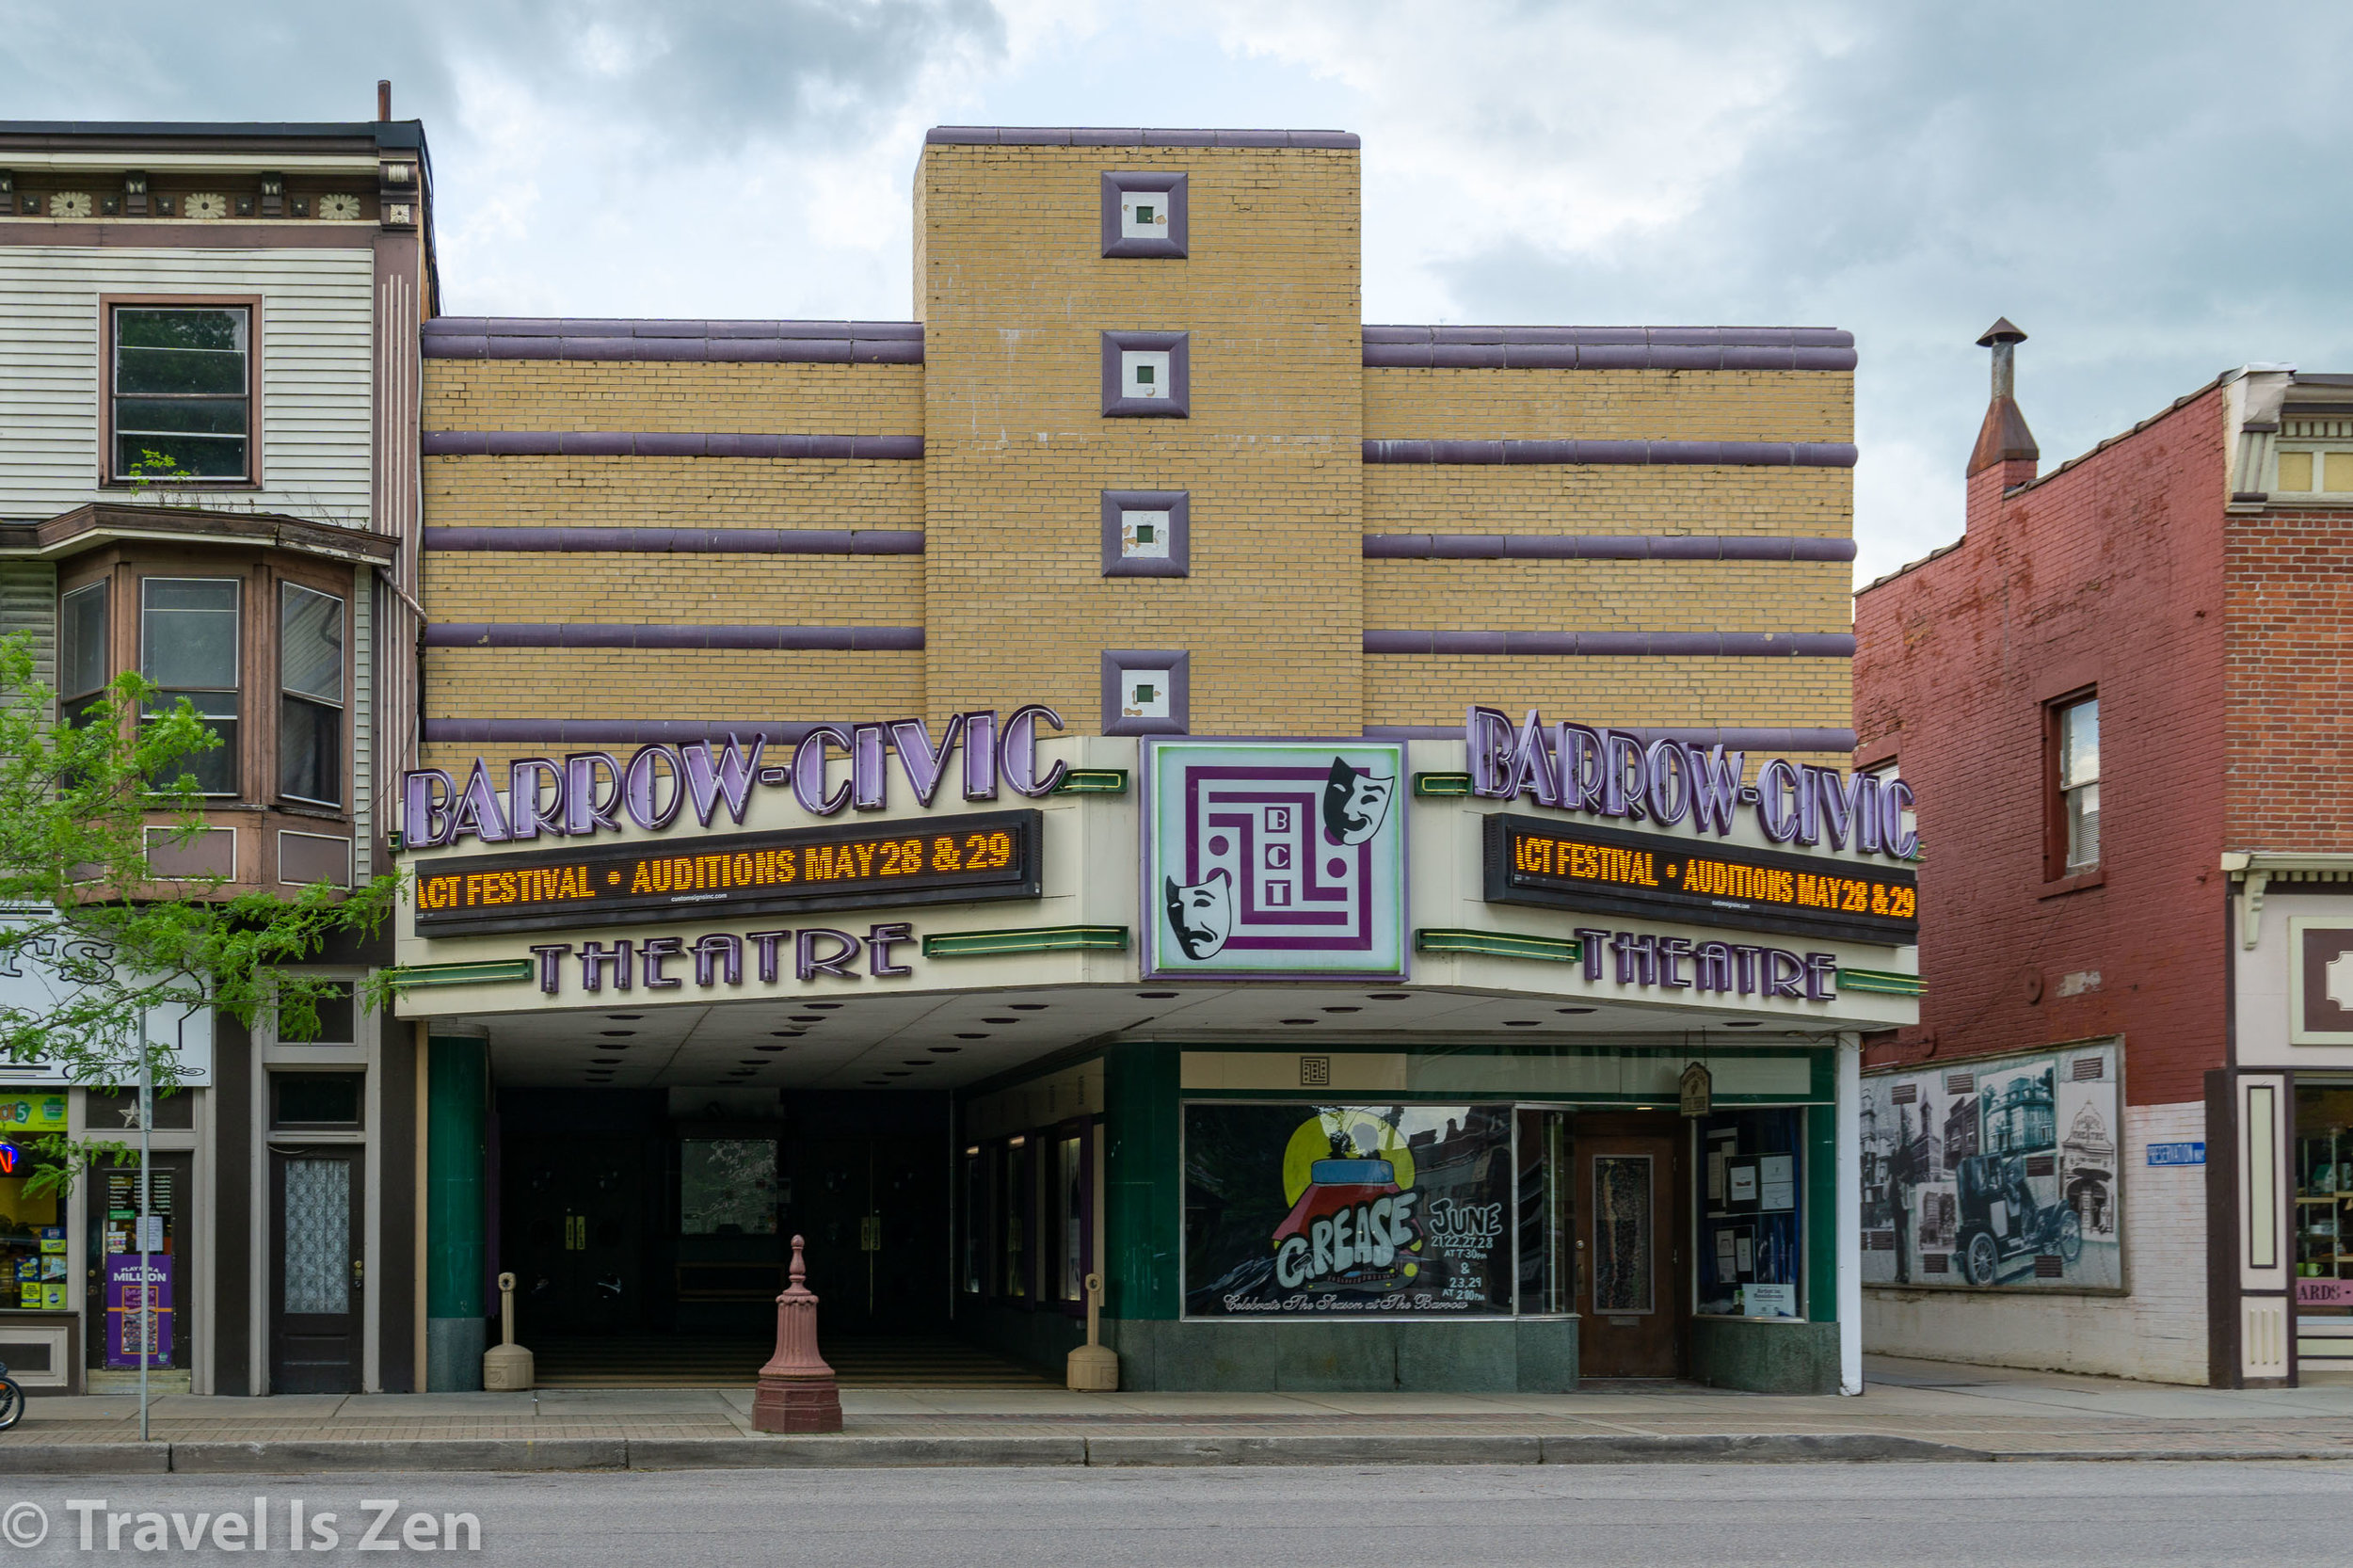 Barrow Civic Theater